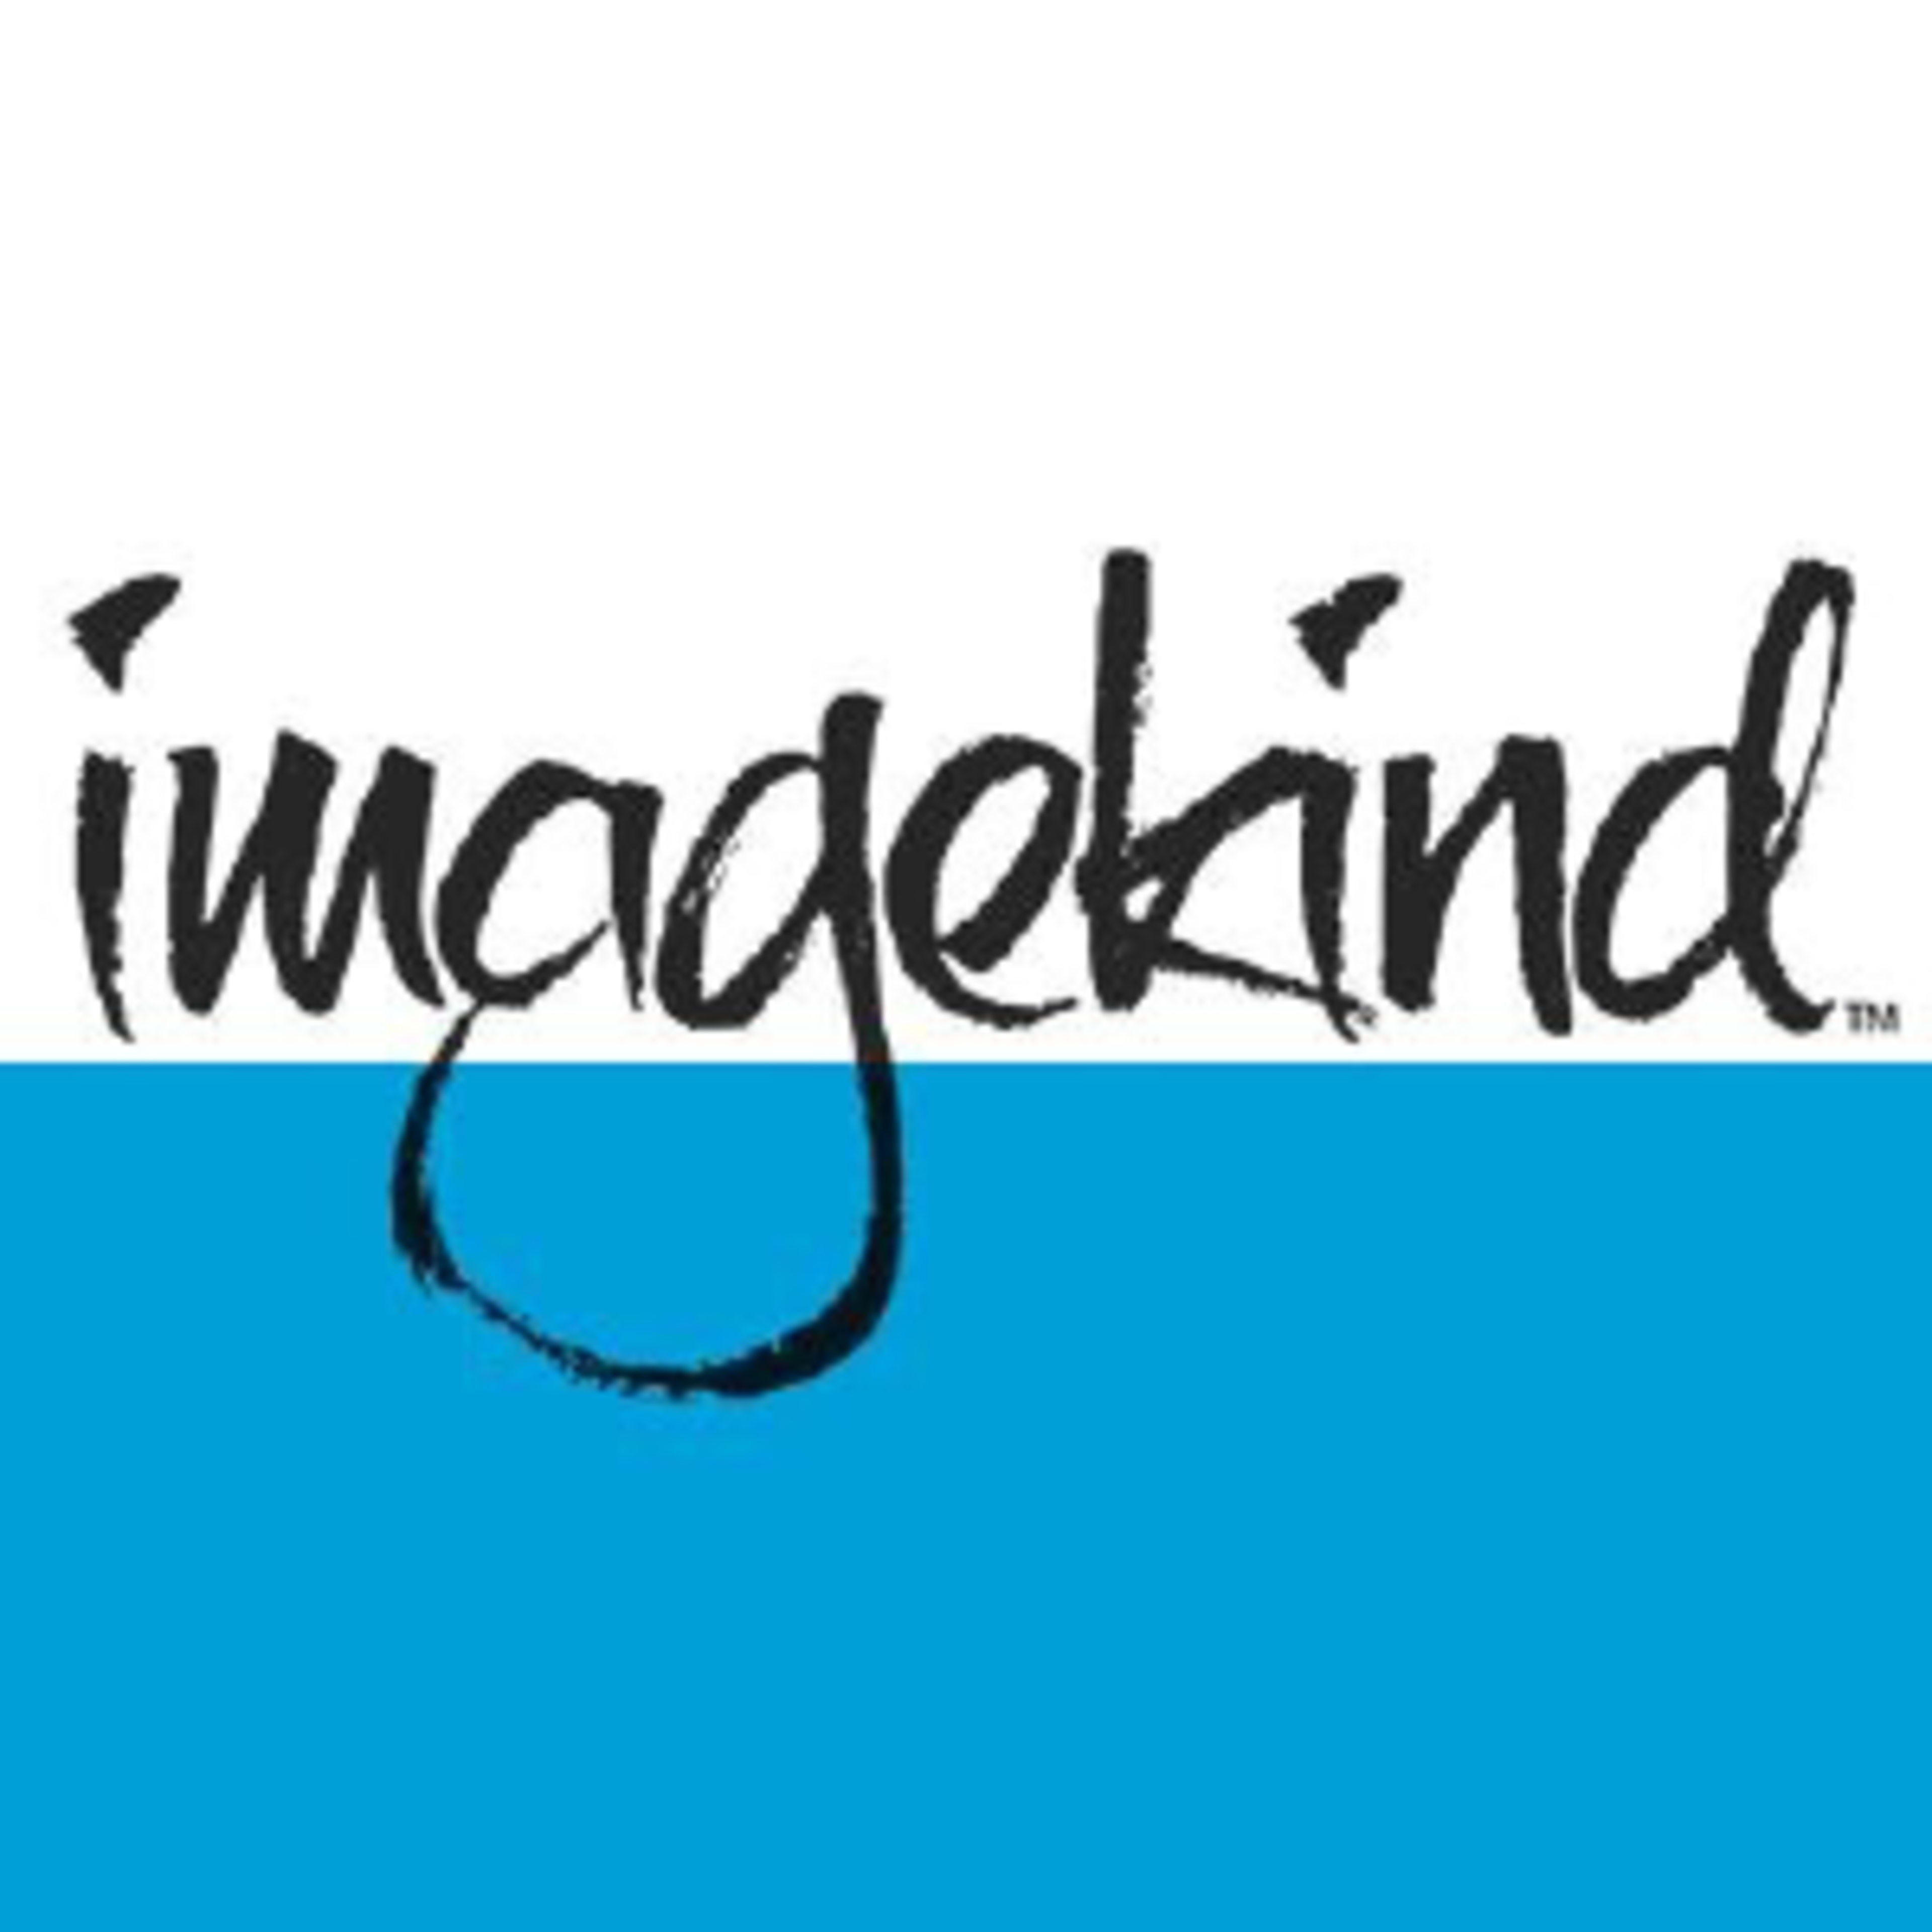 Imagekind-Artwork from independent artists Code